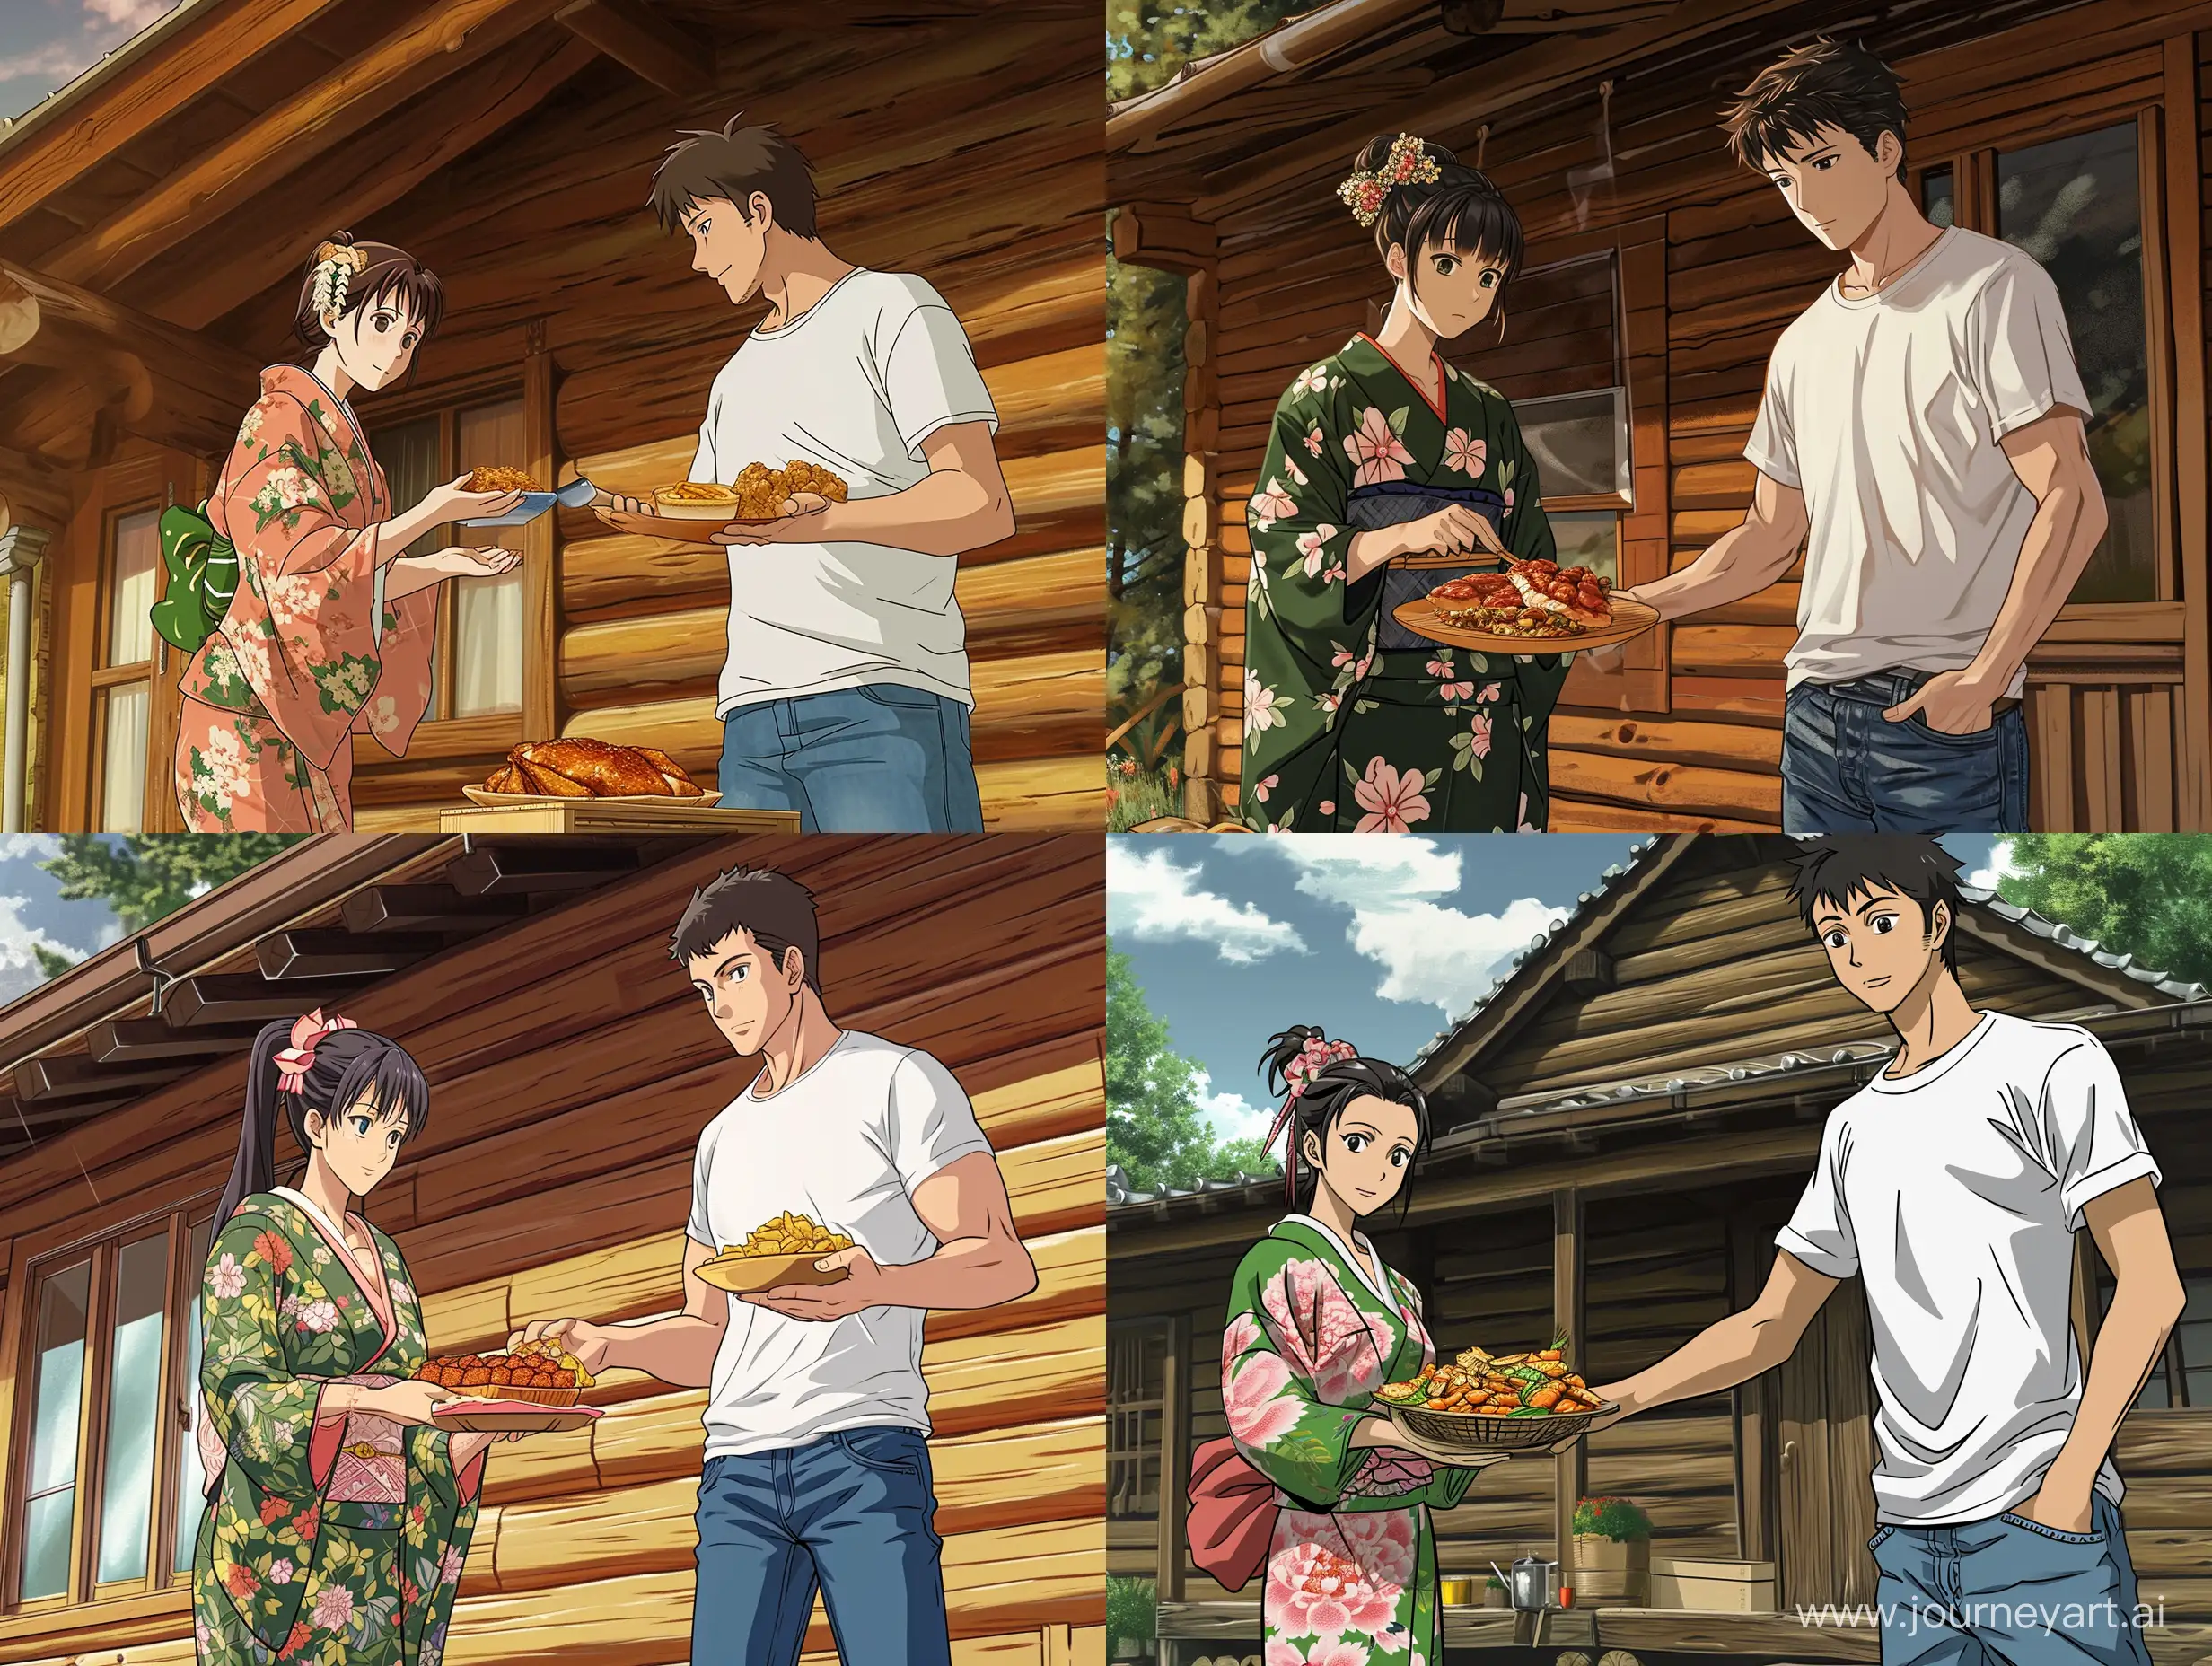 Traditional-Anime-Scene-Woman-in-Kimono-Serving-Humble-Food-to-Man-in-Casual-Attire